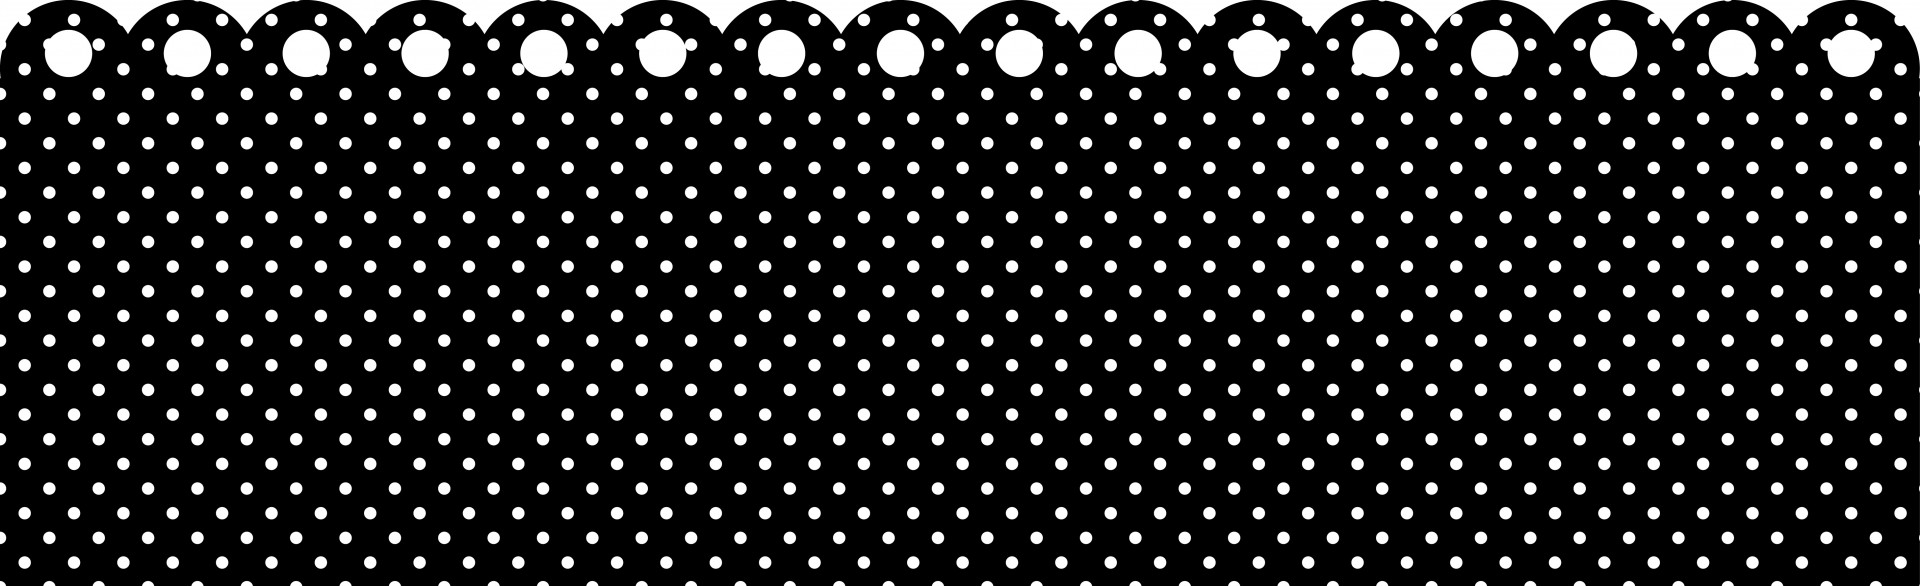 Polka Dots Border Black White Stock Photo HD Public Domain